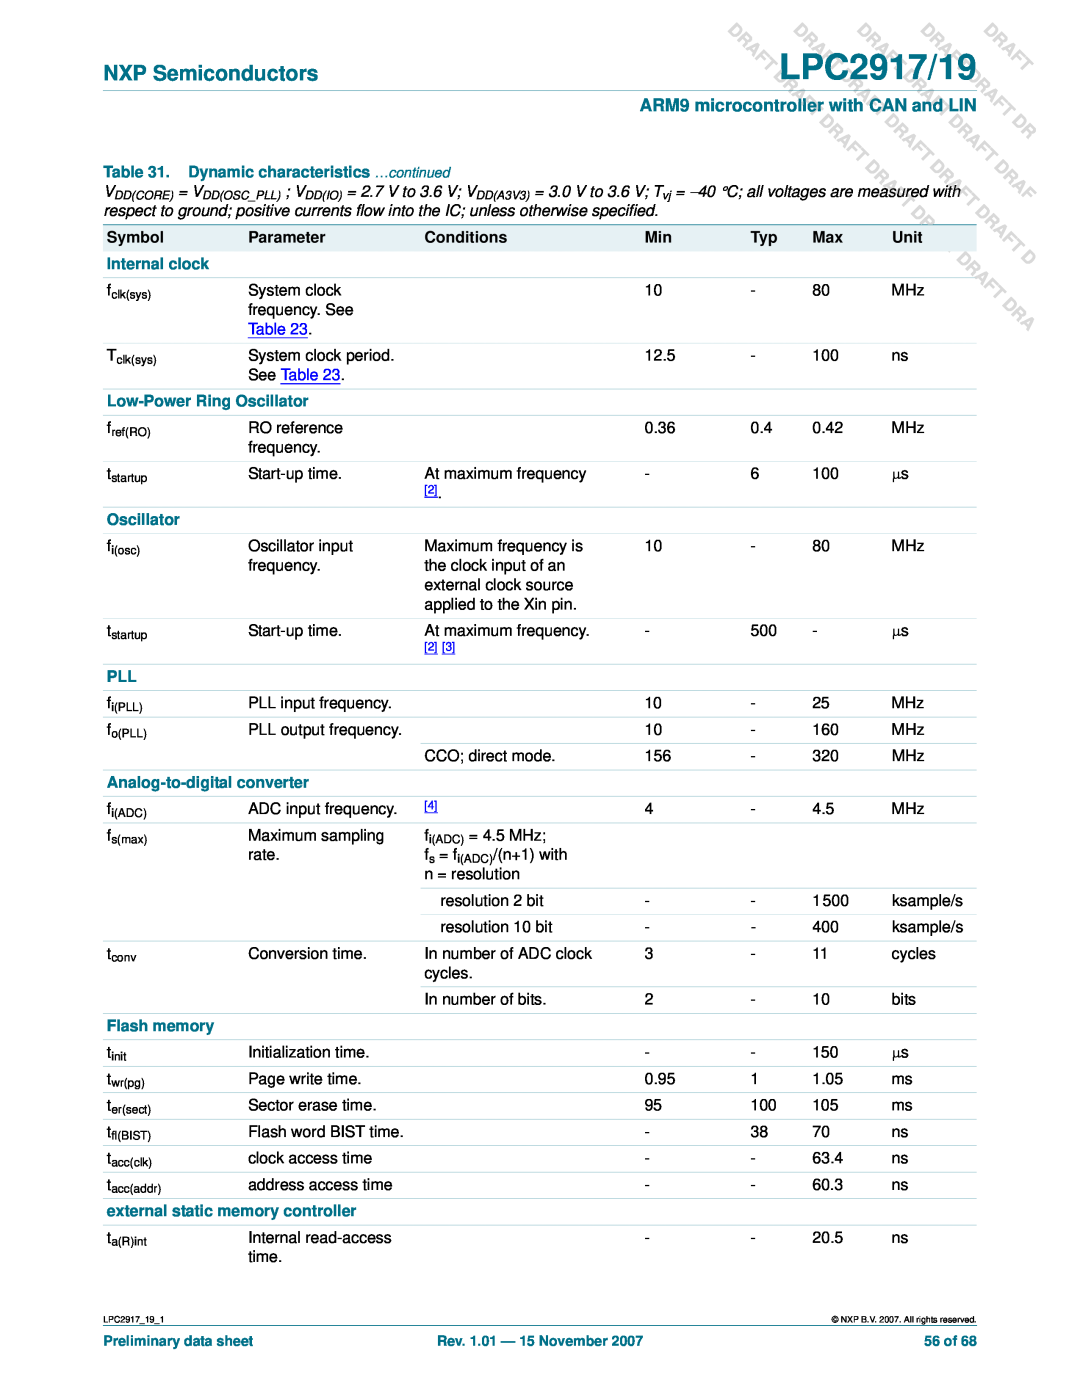 NXP Semiconductors LPC2919 user manual UnitDRAFT, DLPC2917/19, Draft Draft, See Table, 56 of 